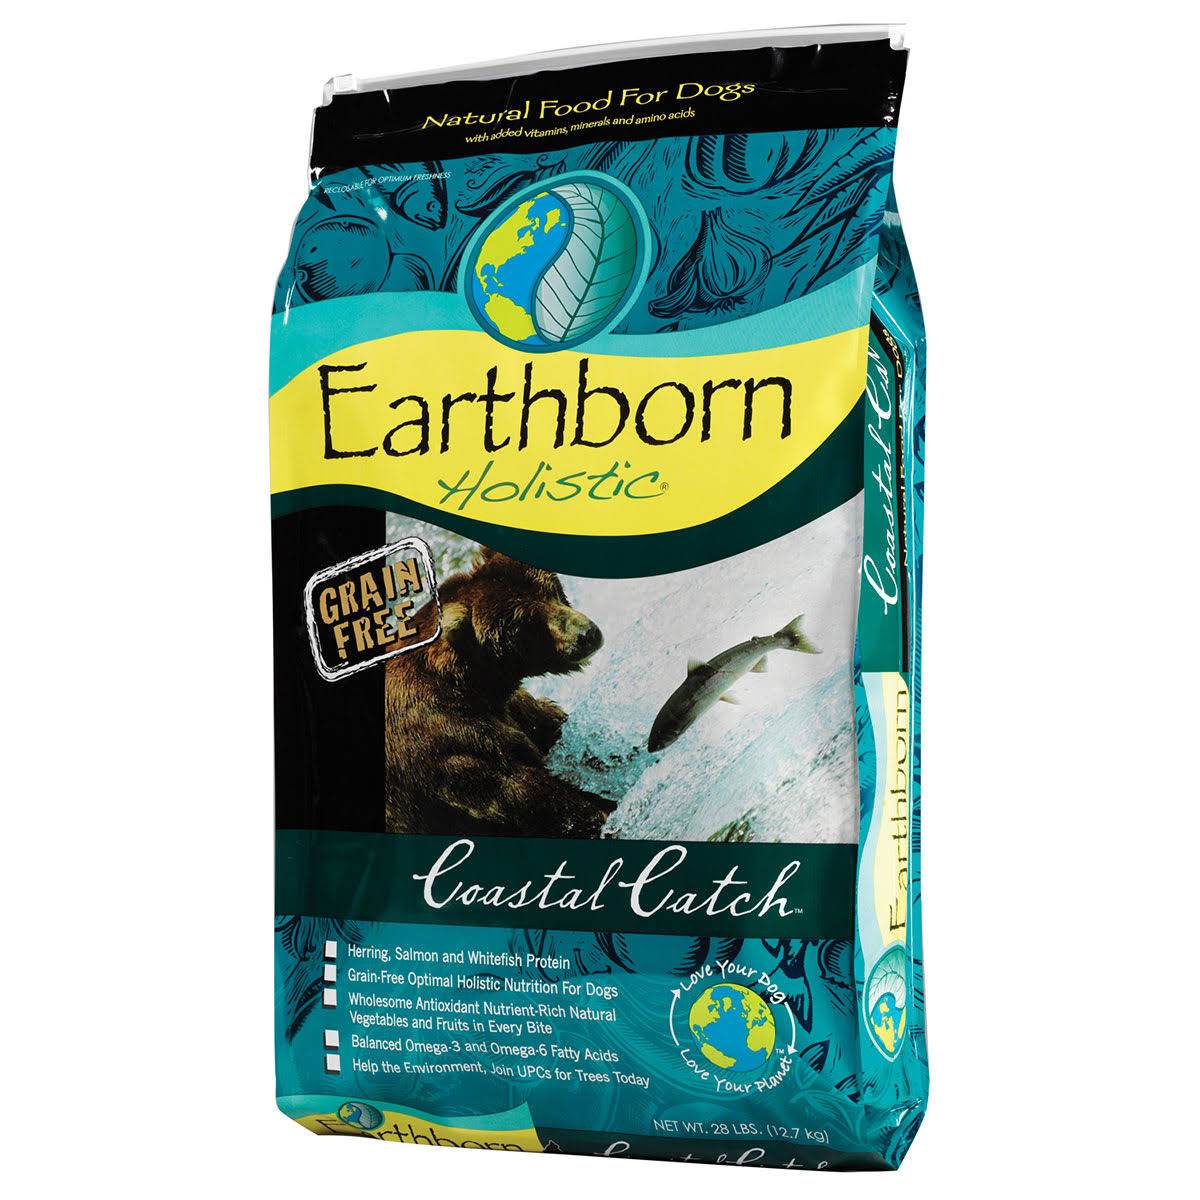 Earthborn Holistic Coastal Catch Grain Free Natural Dog Food 25-lb